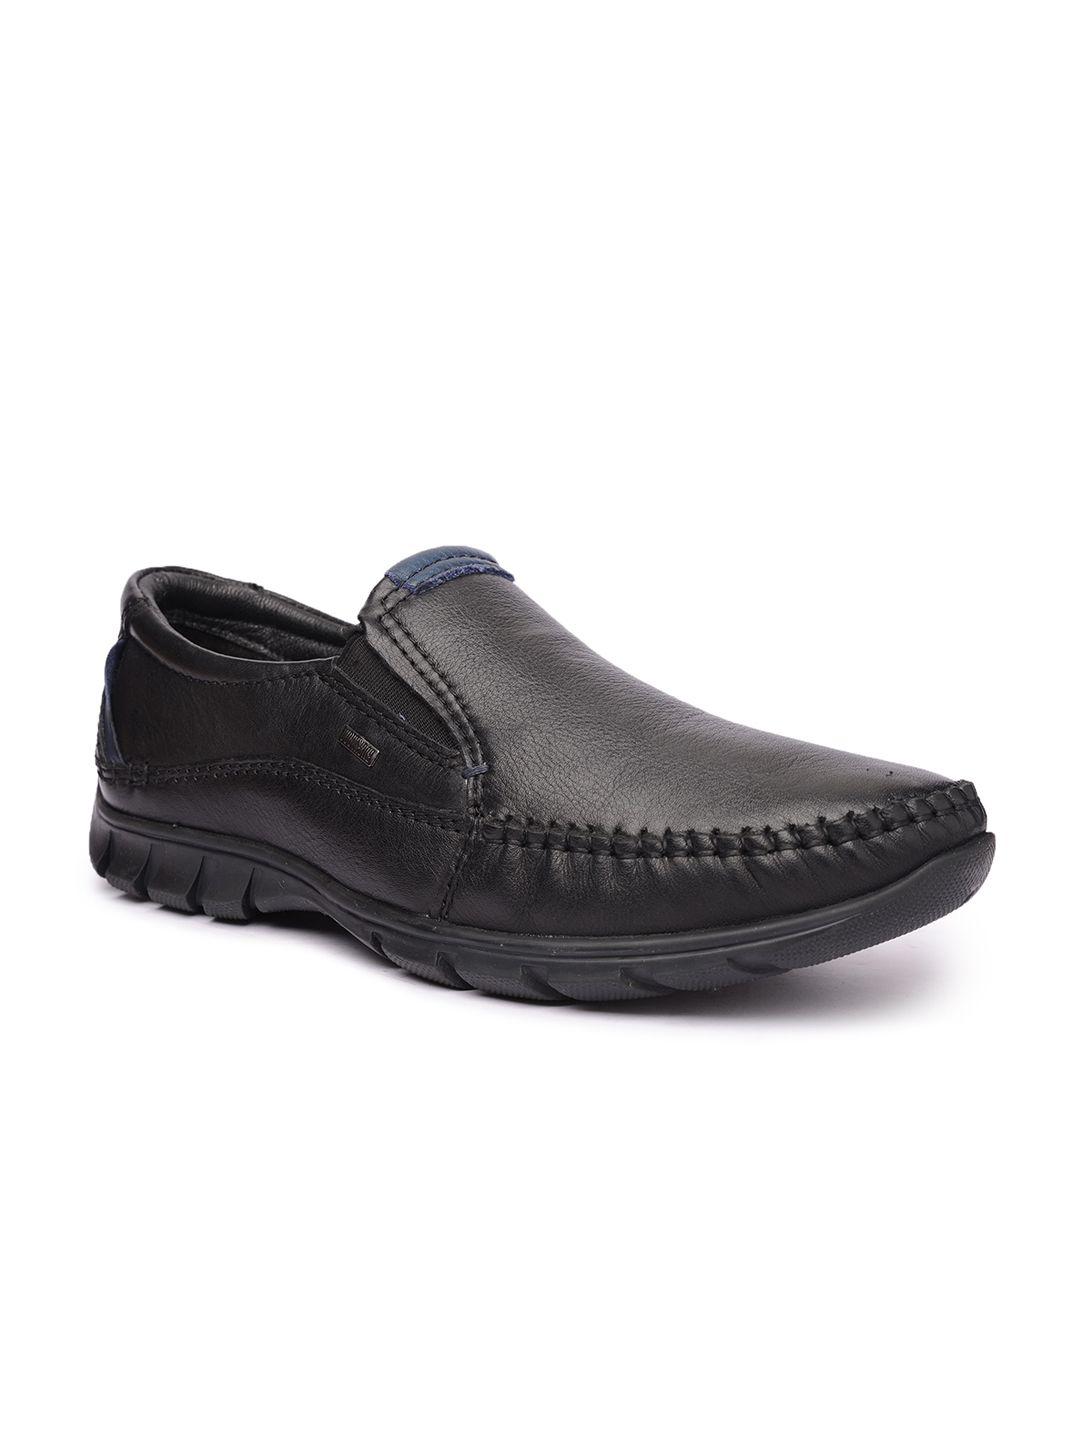 buckaroo men black genuine leather casual slip-on shoes